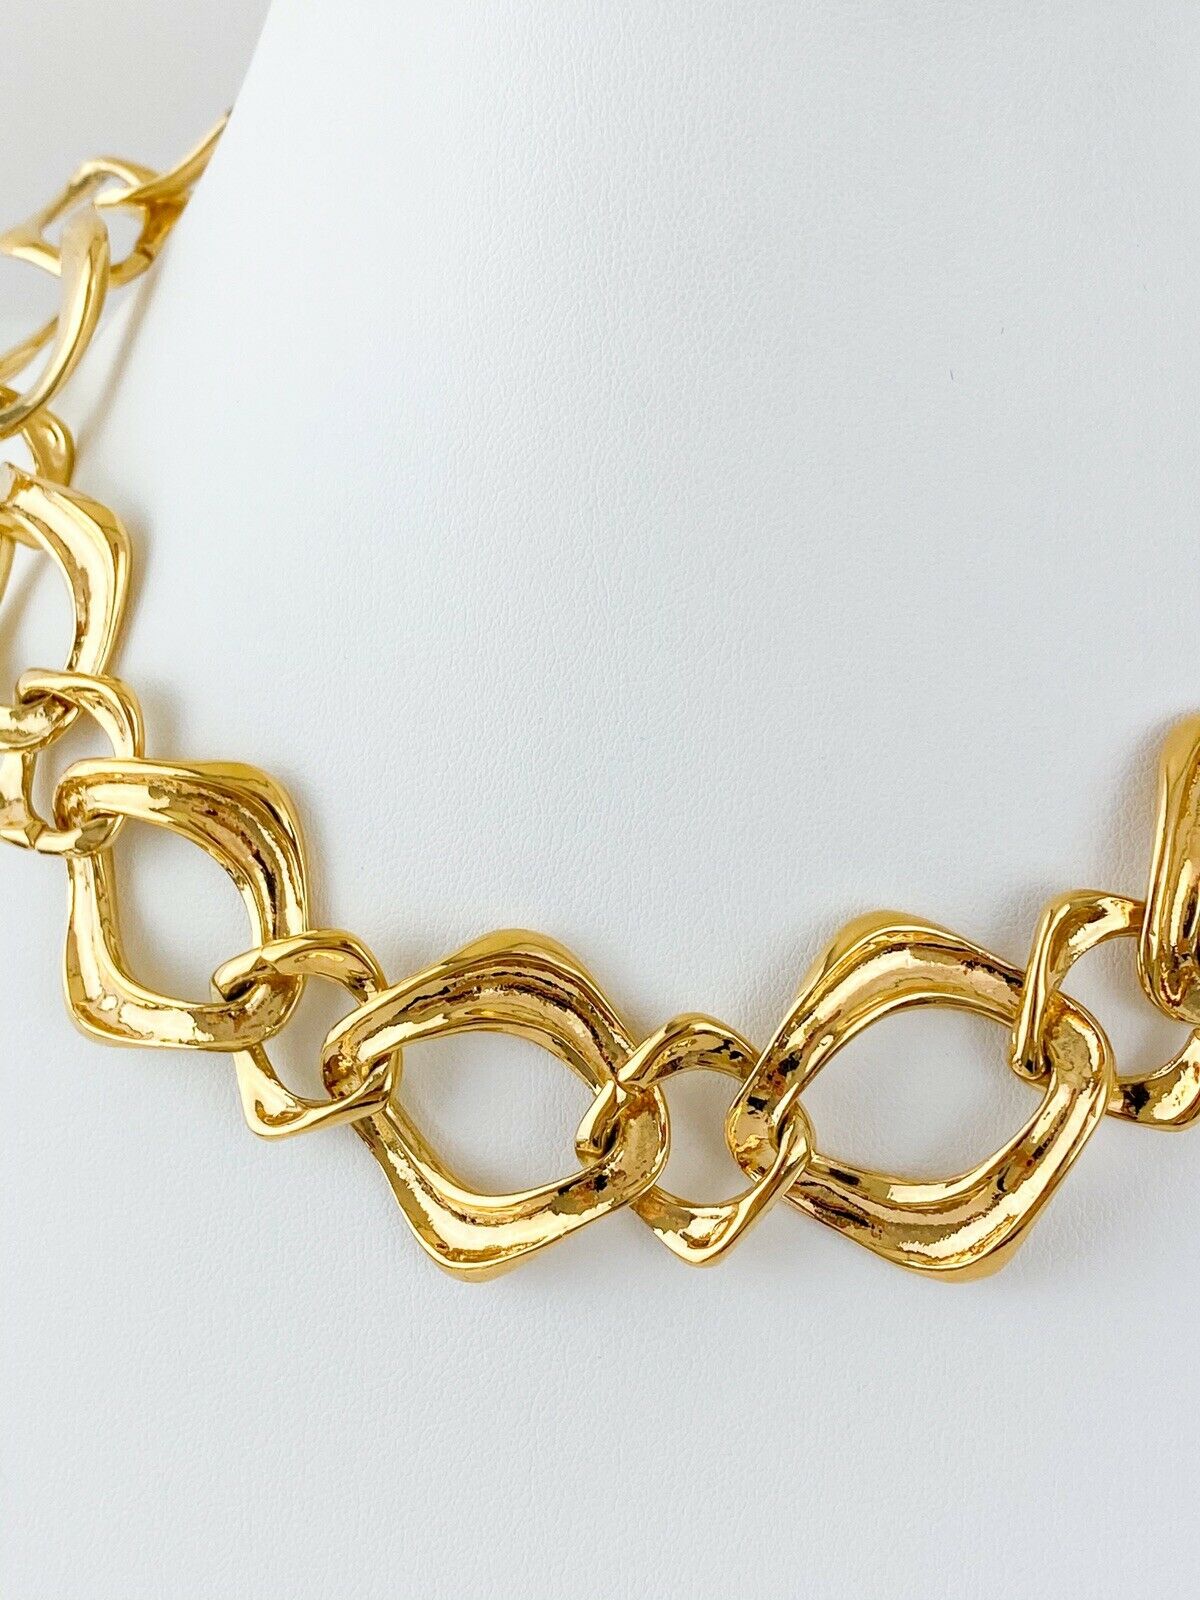 YSL Yves Saint Laurent Vintage Chain Necklace Gold